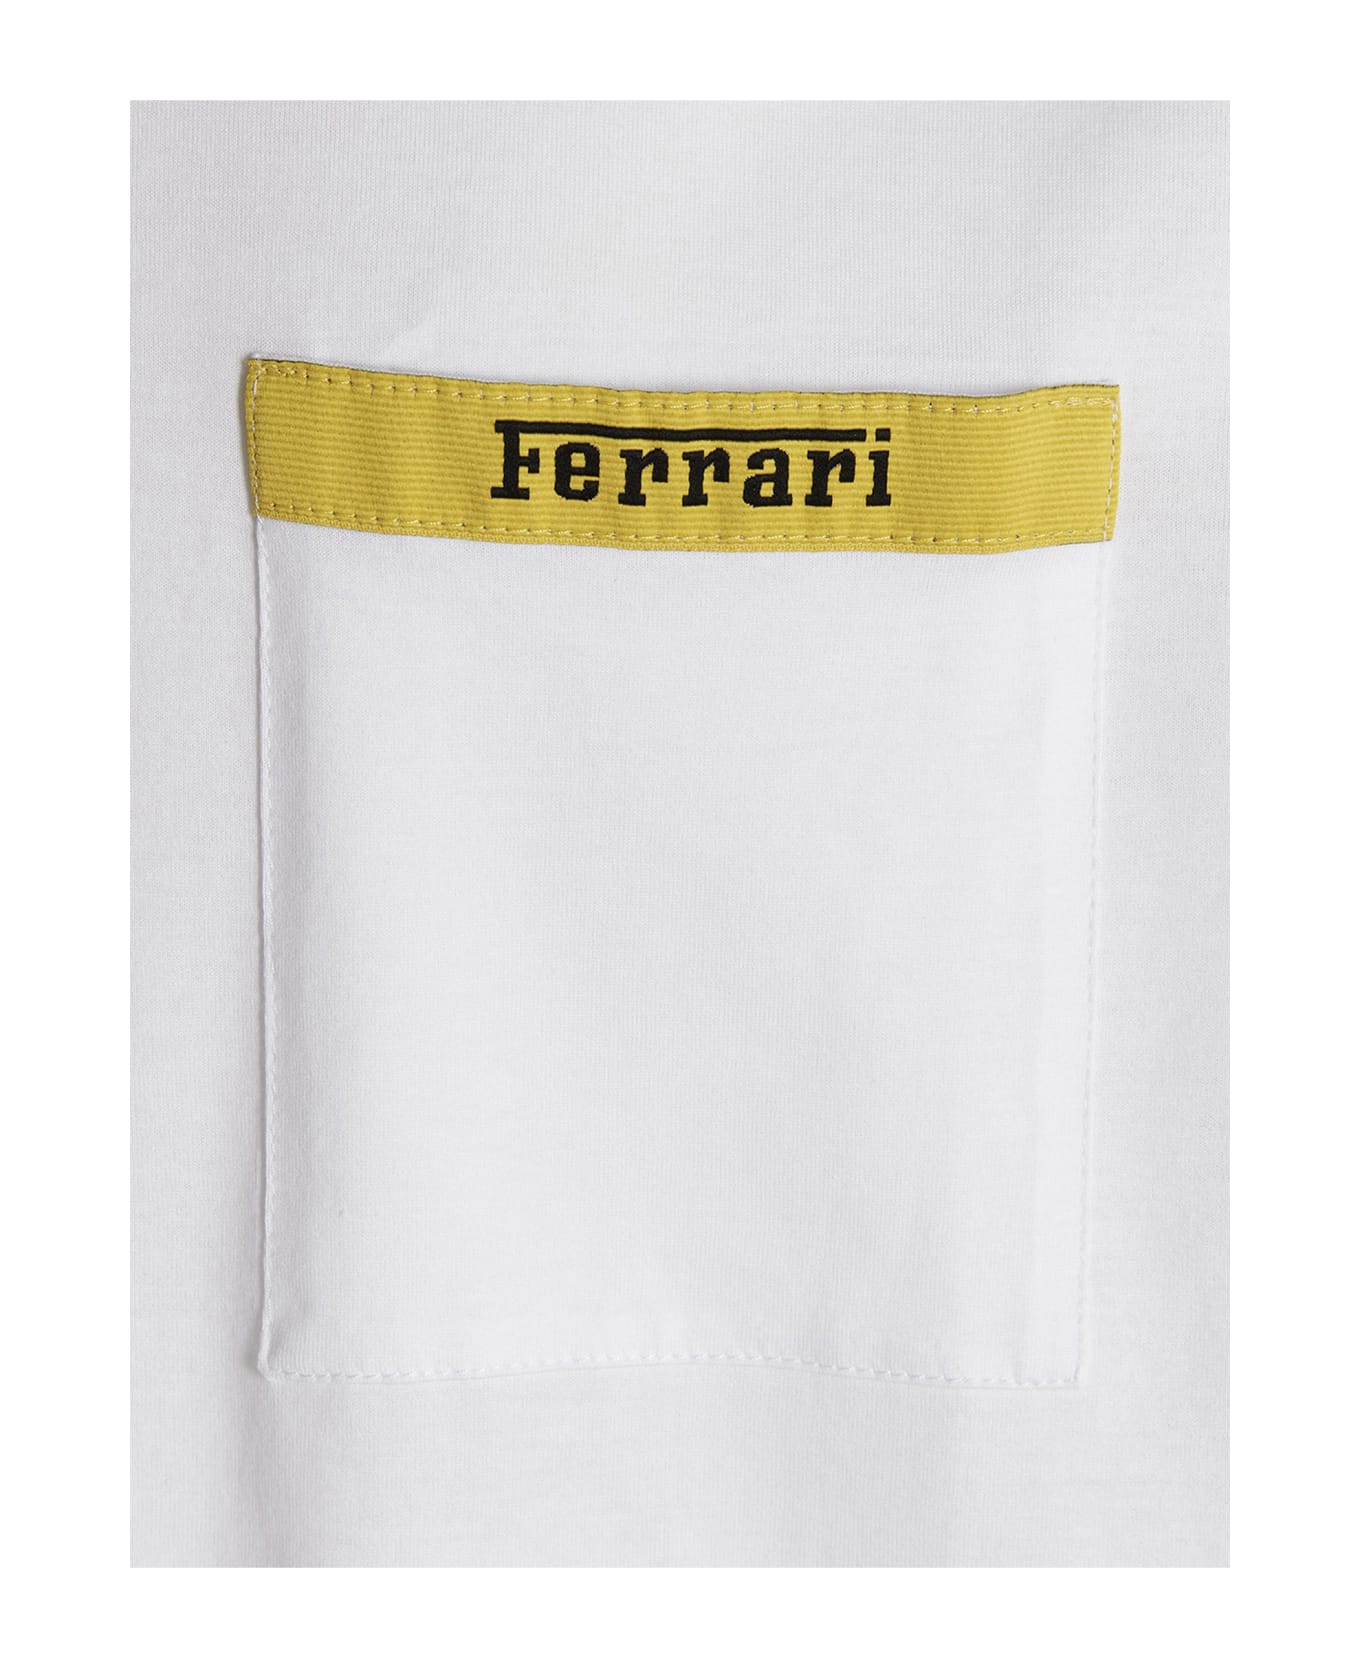 Ferrari 'pocket' T-shirt シャツ